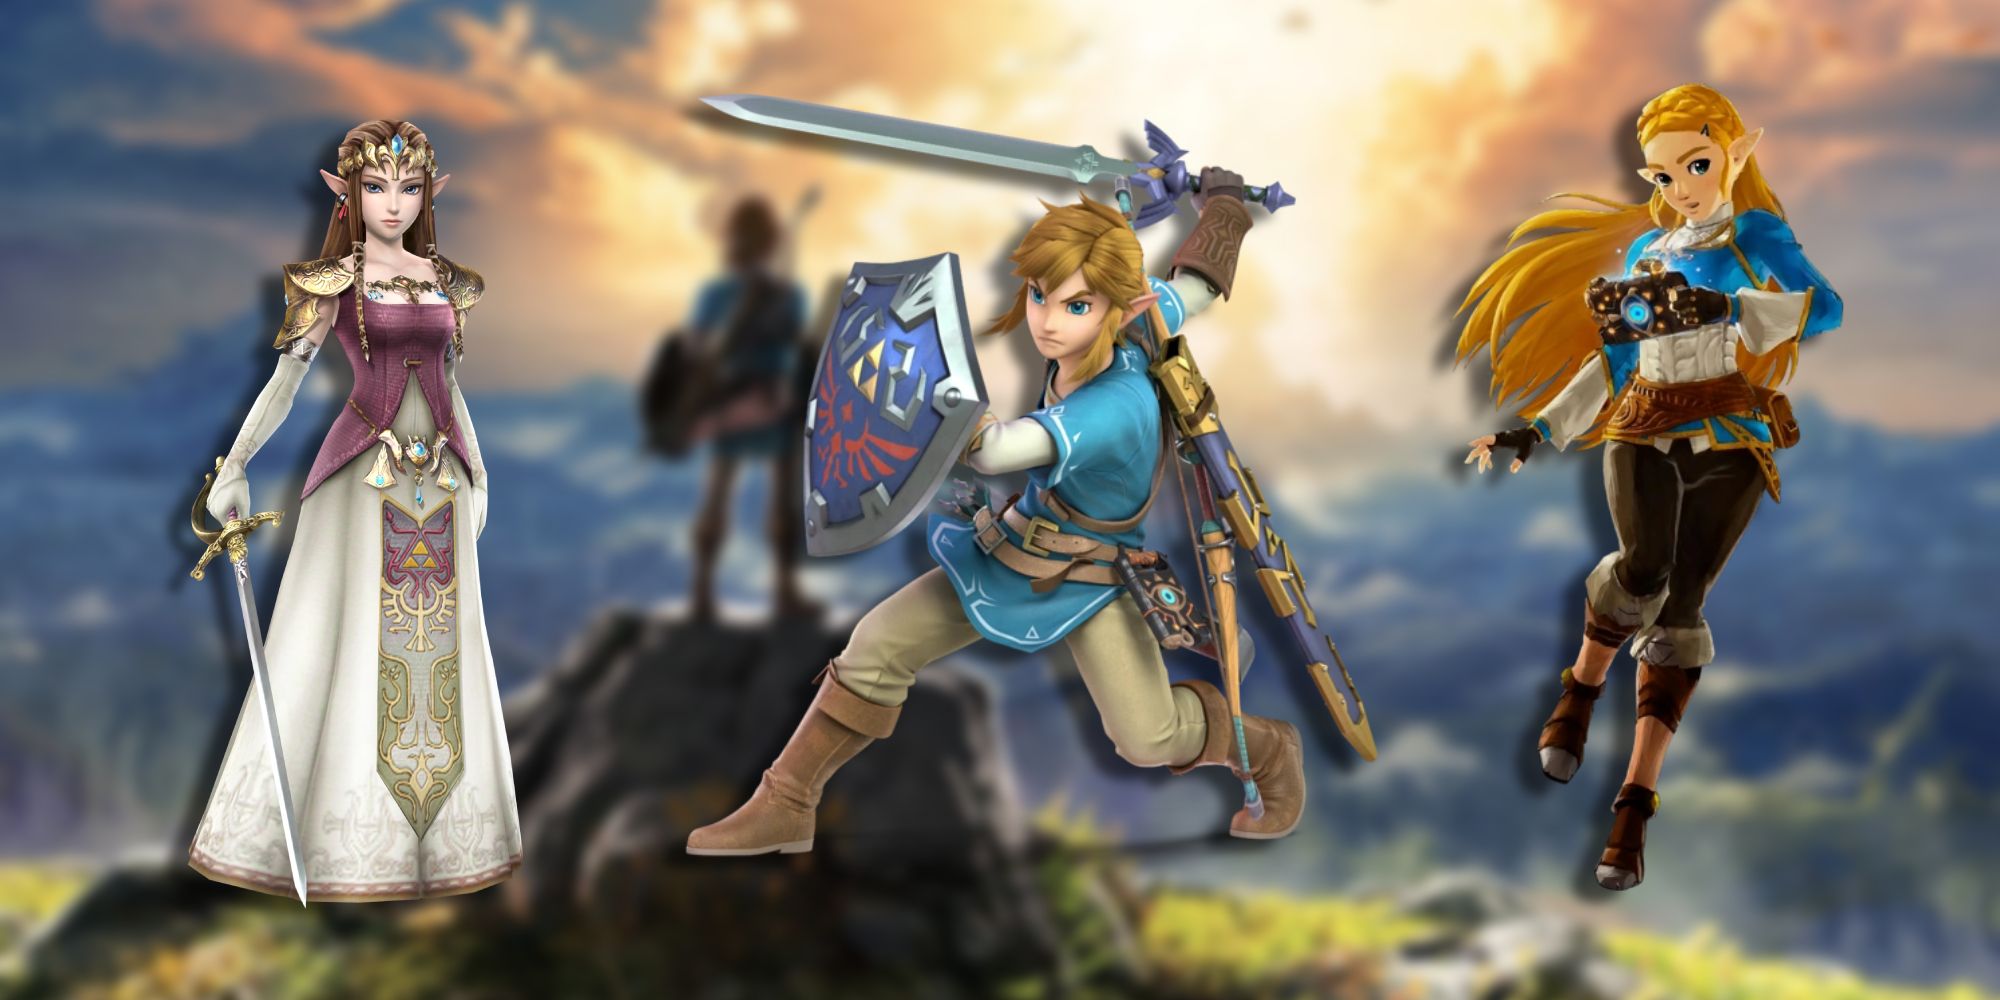 Boys Legend of Zelda Inspired Link Costume 